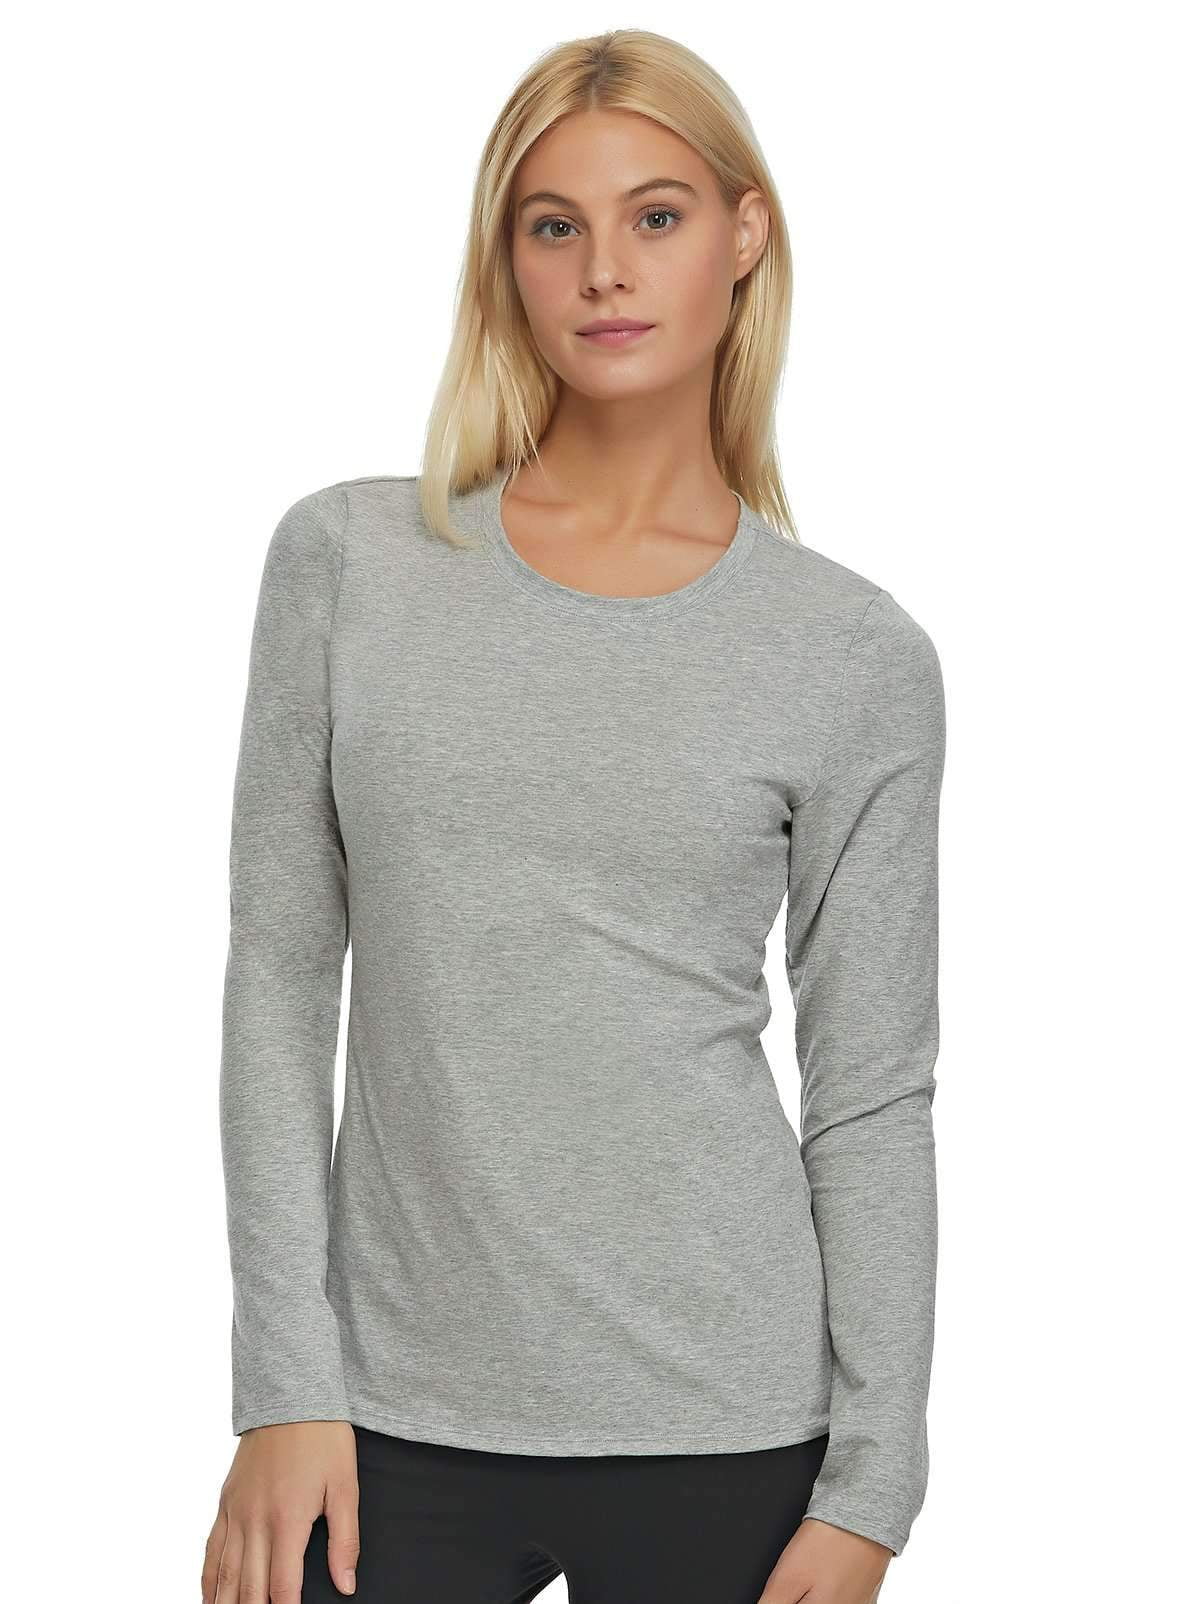 Heather (Medium Long Large) Grey, Neck Shirt Crew Felina Sleeve & Modal Cotton | |